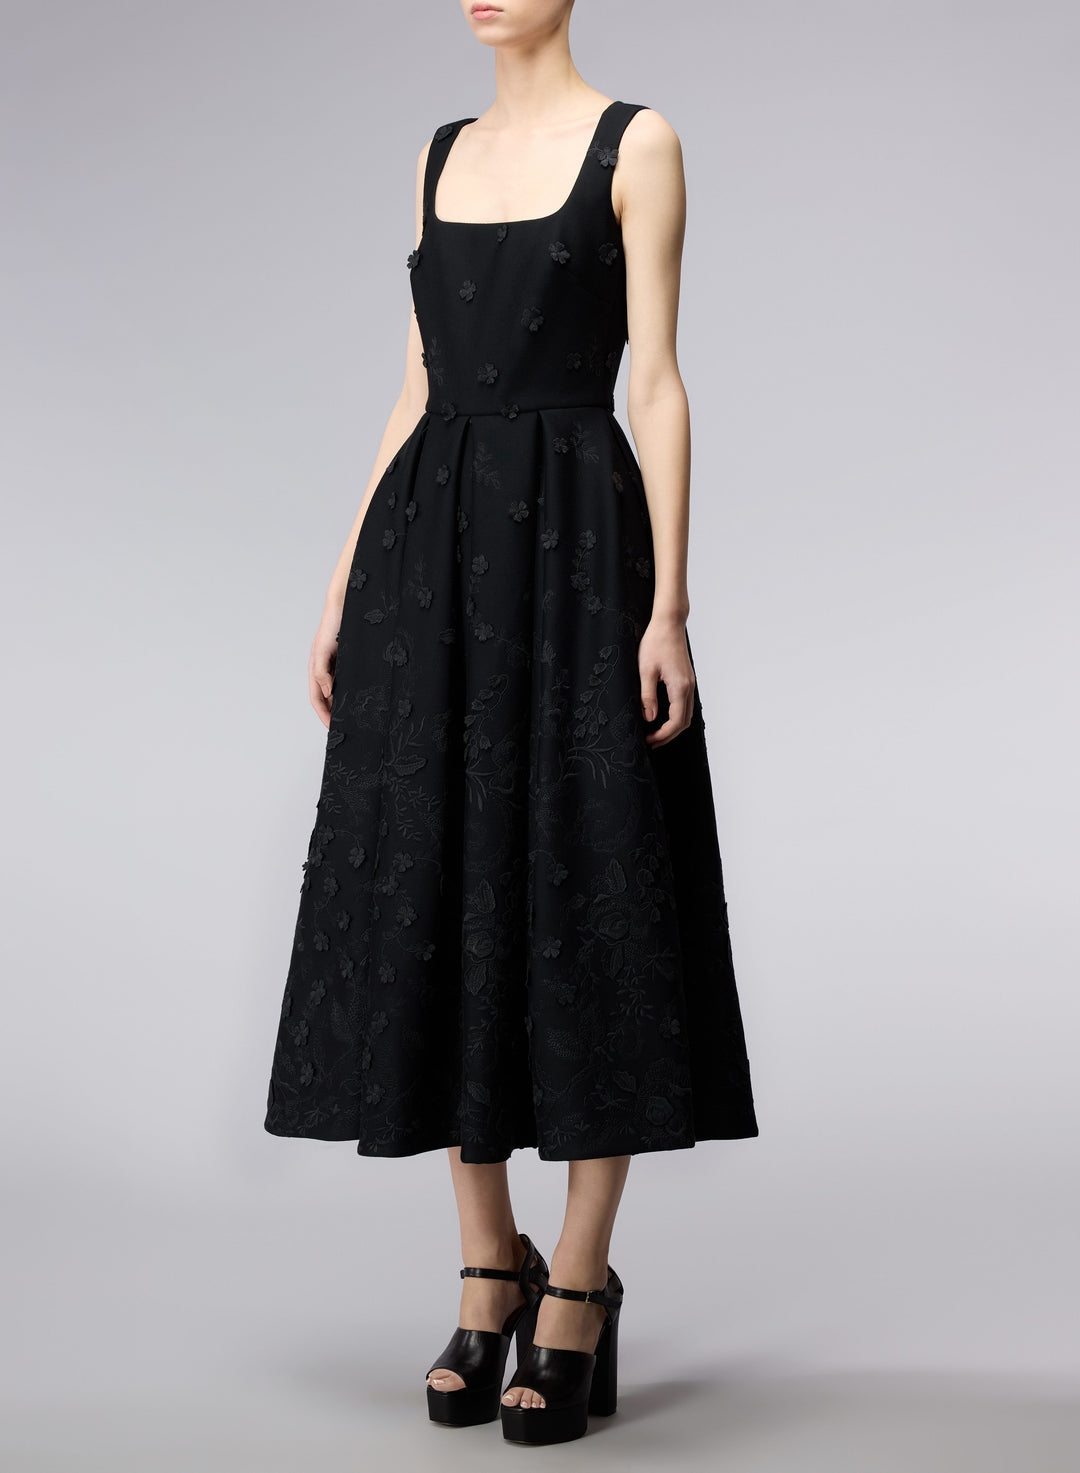 Designer Ready-to-Wear Dresses for Women - ELIE SAAB – Page 4 – Elie ...